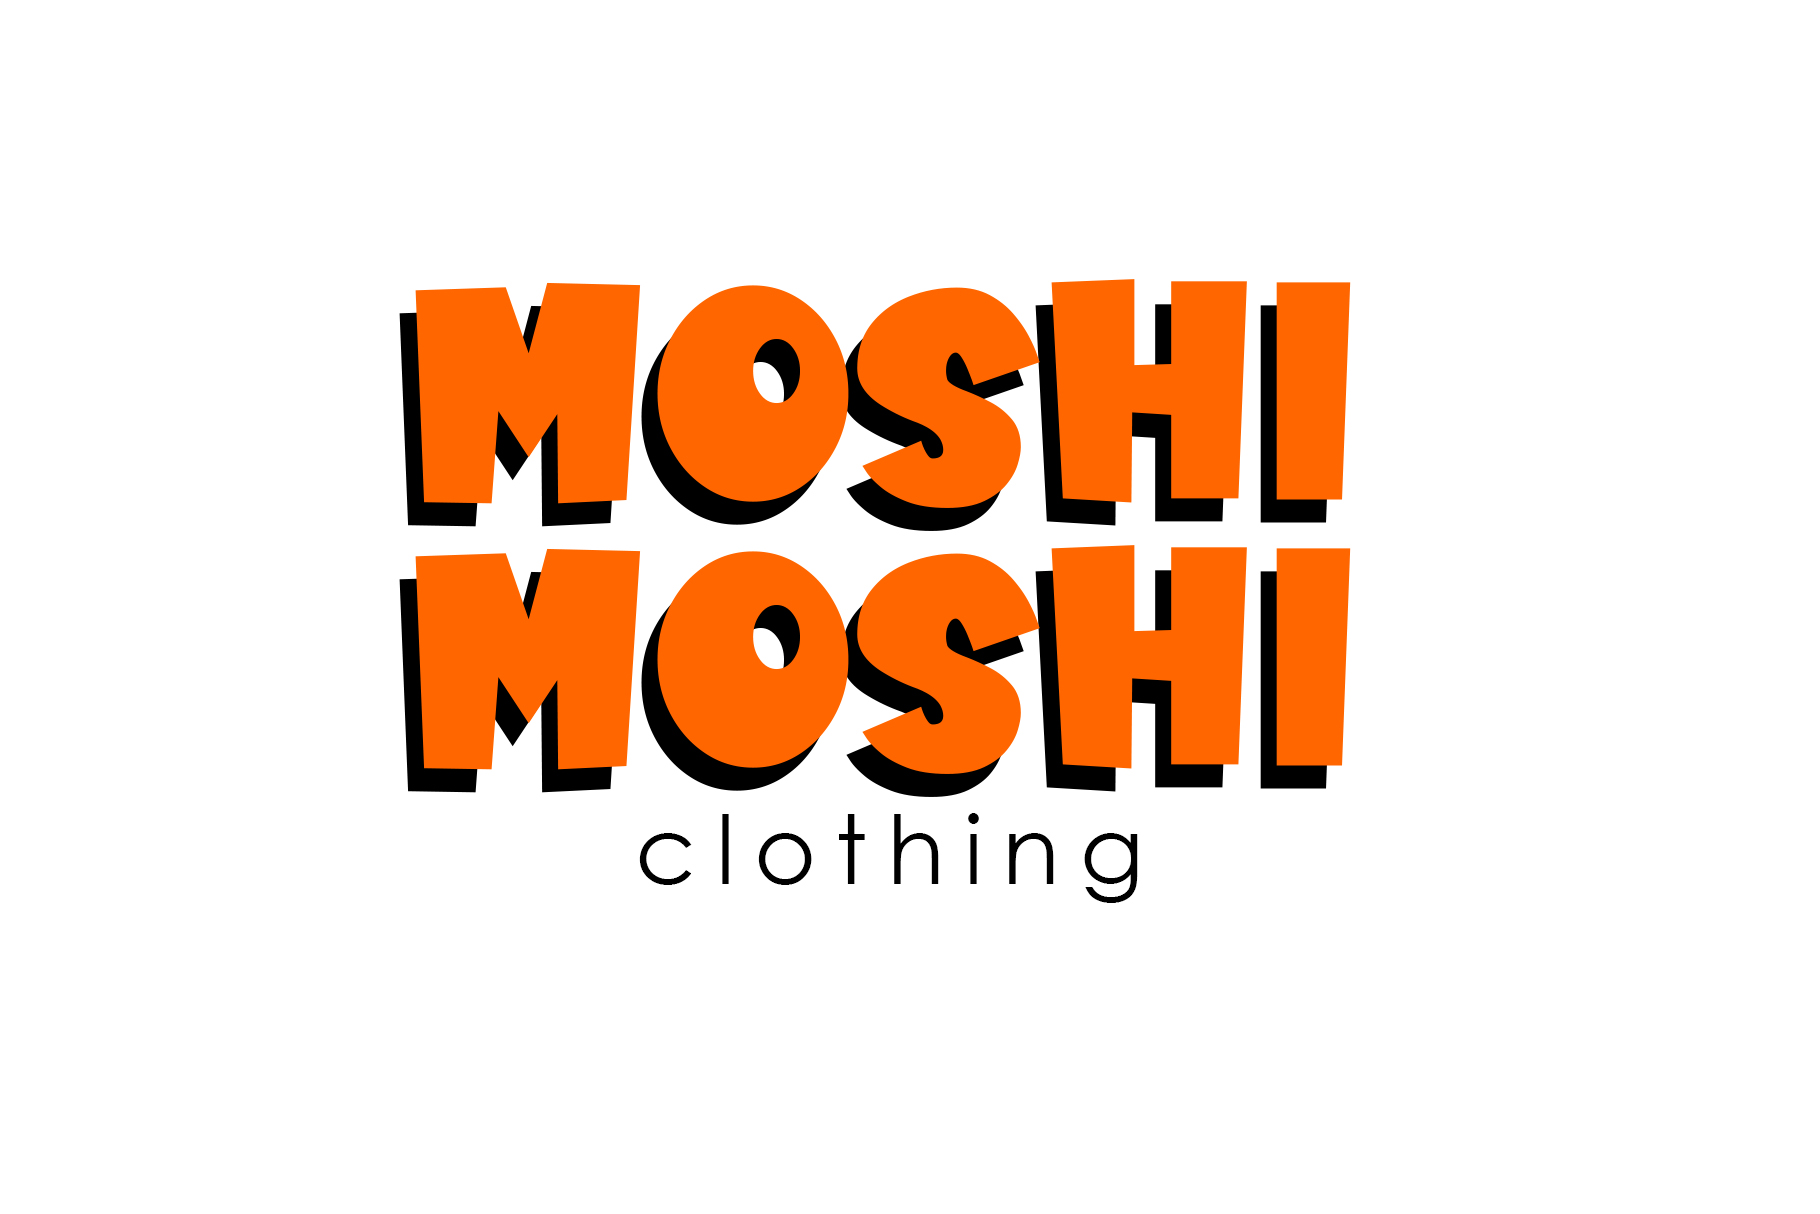 Sushi Moshi